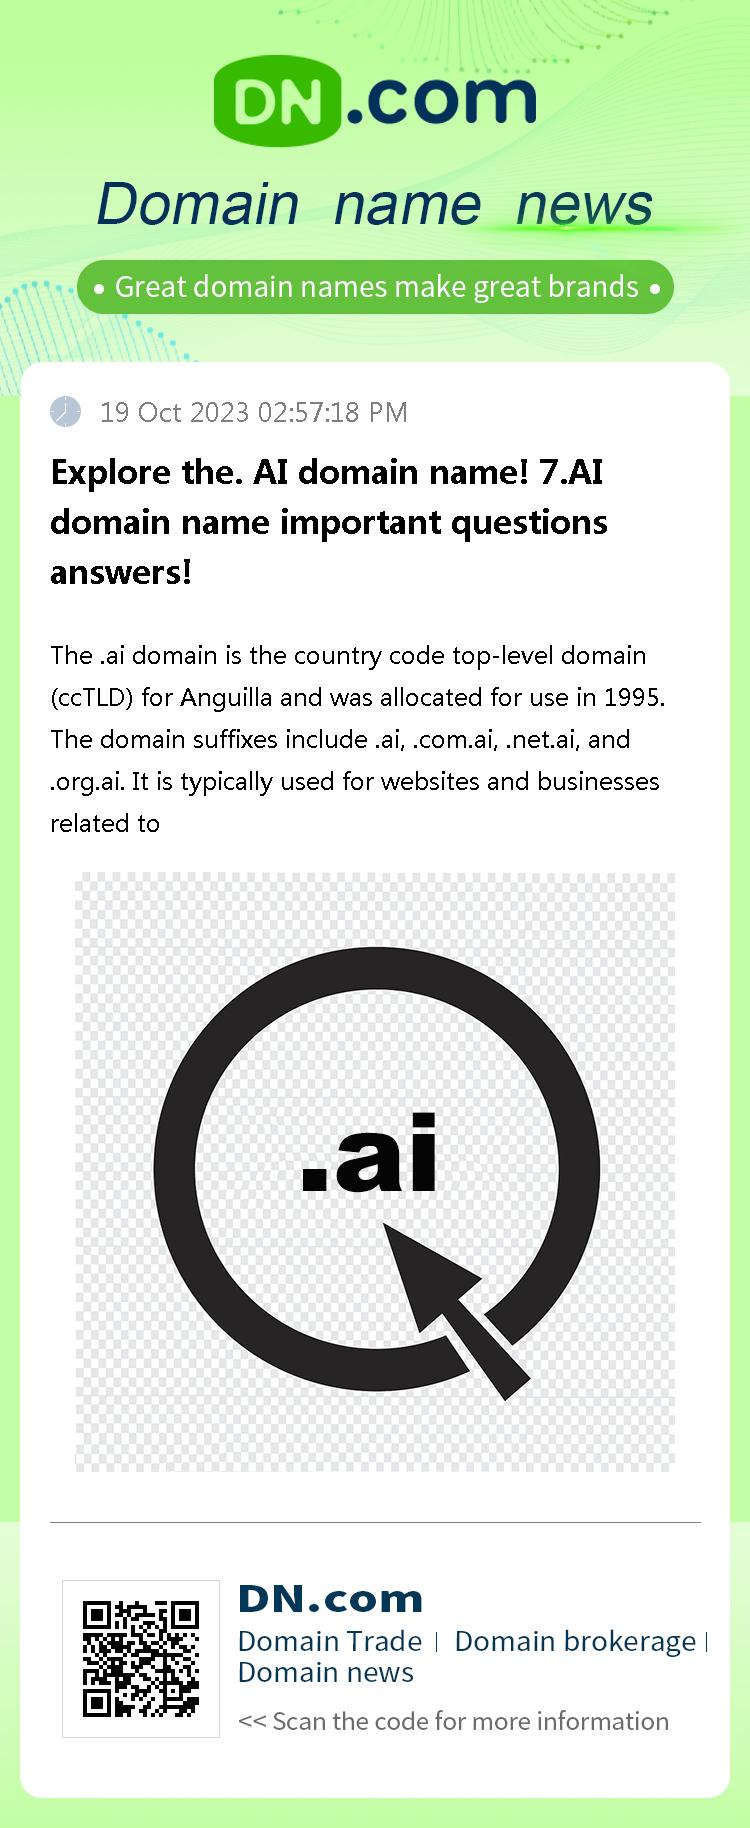 Explore the. AI domain name! 7.AI domain name important questions answers!